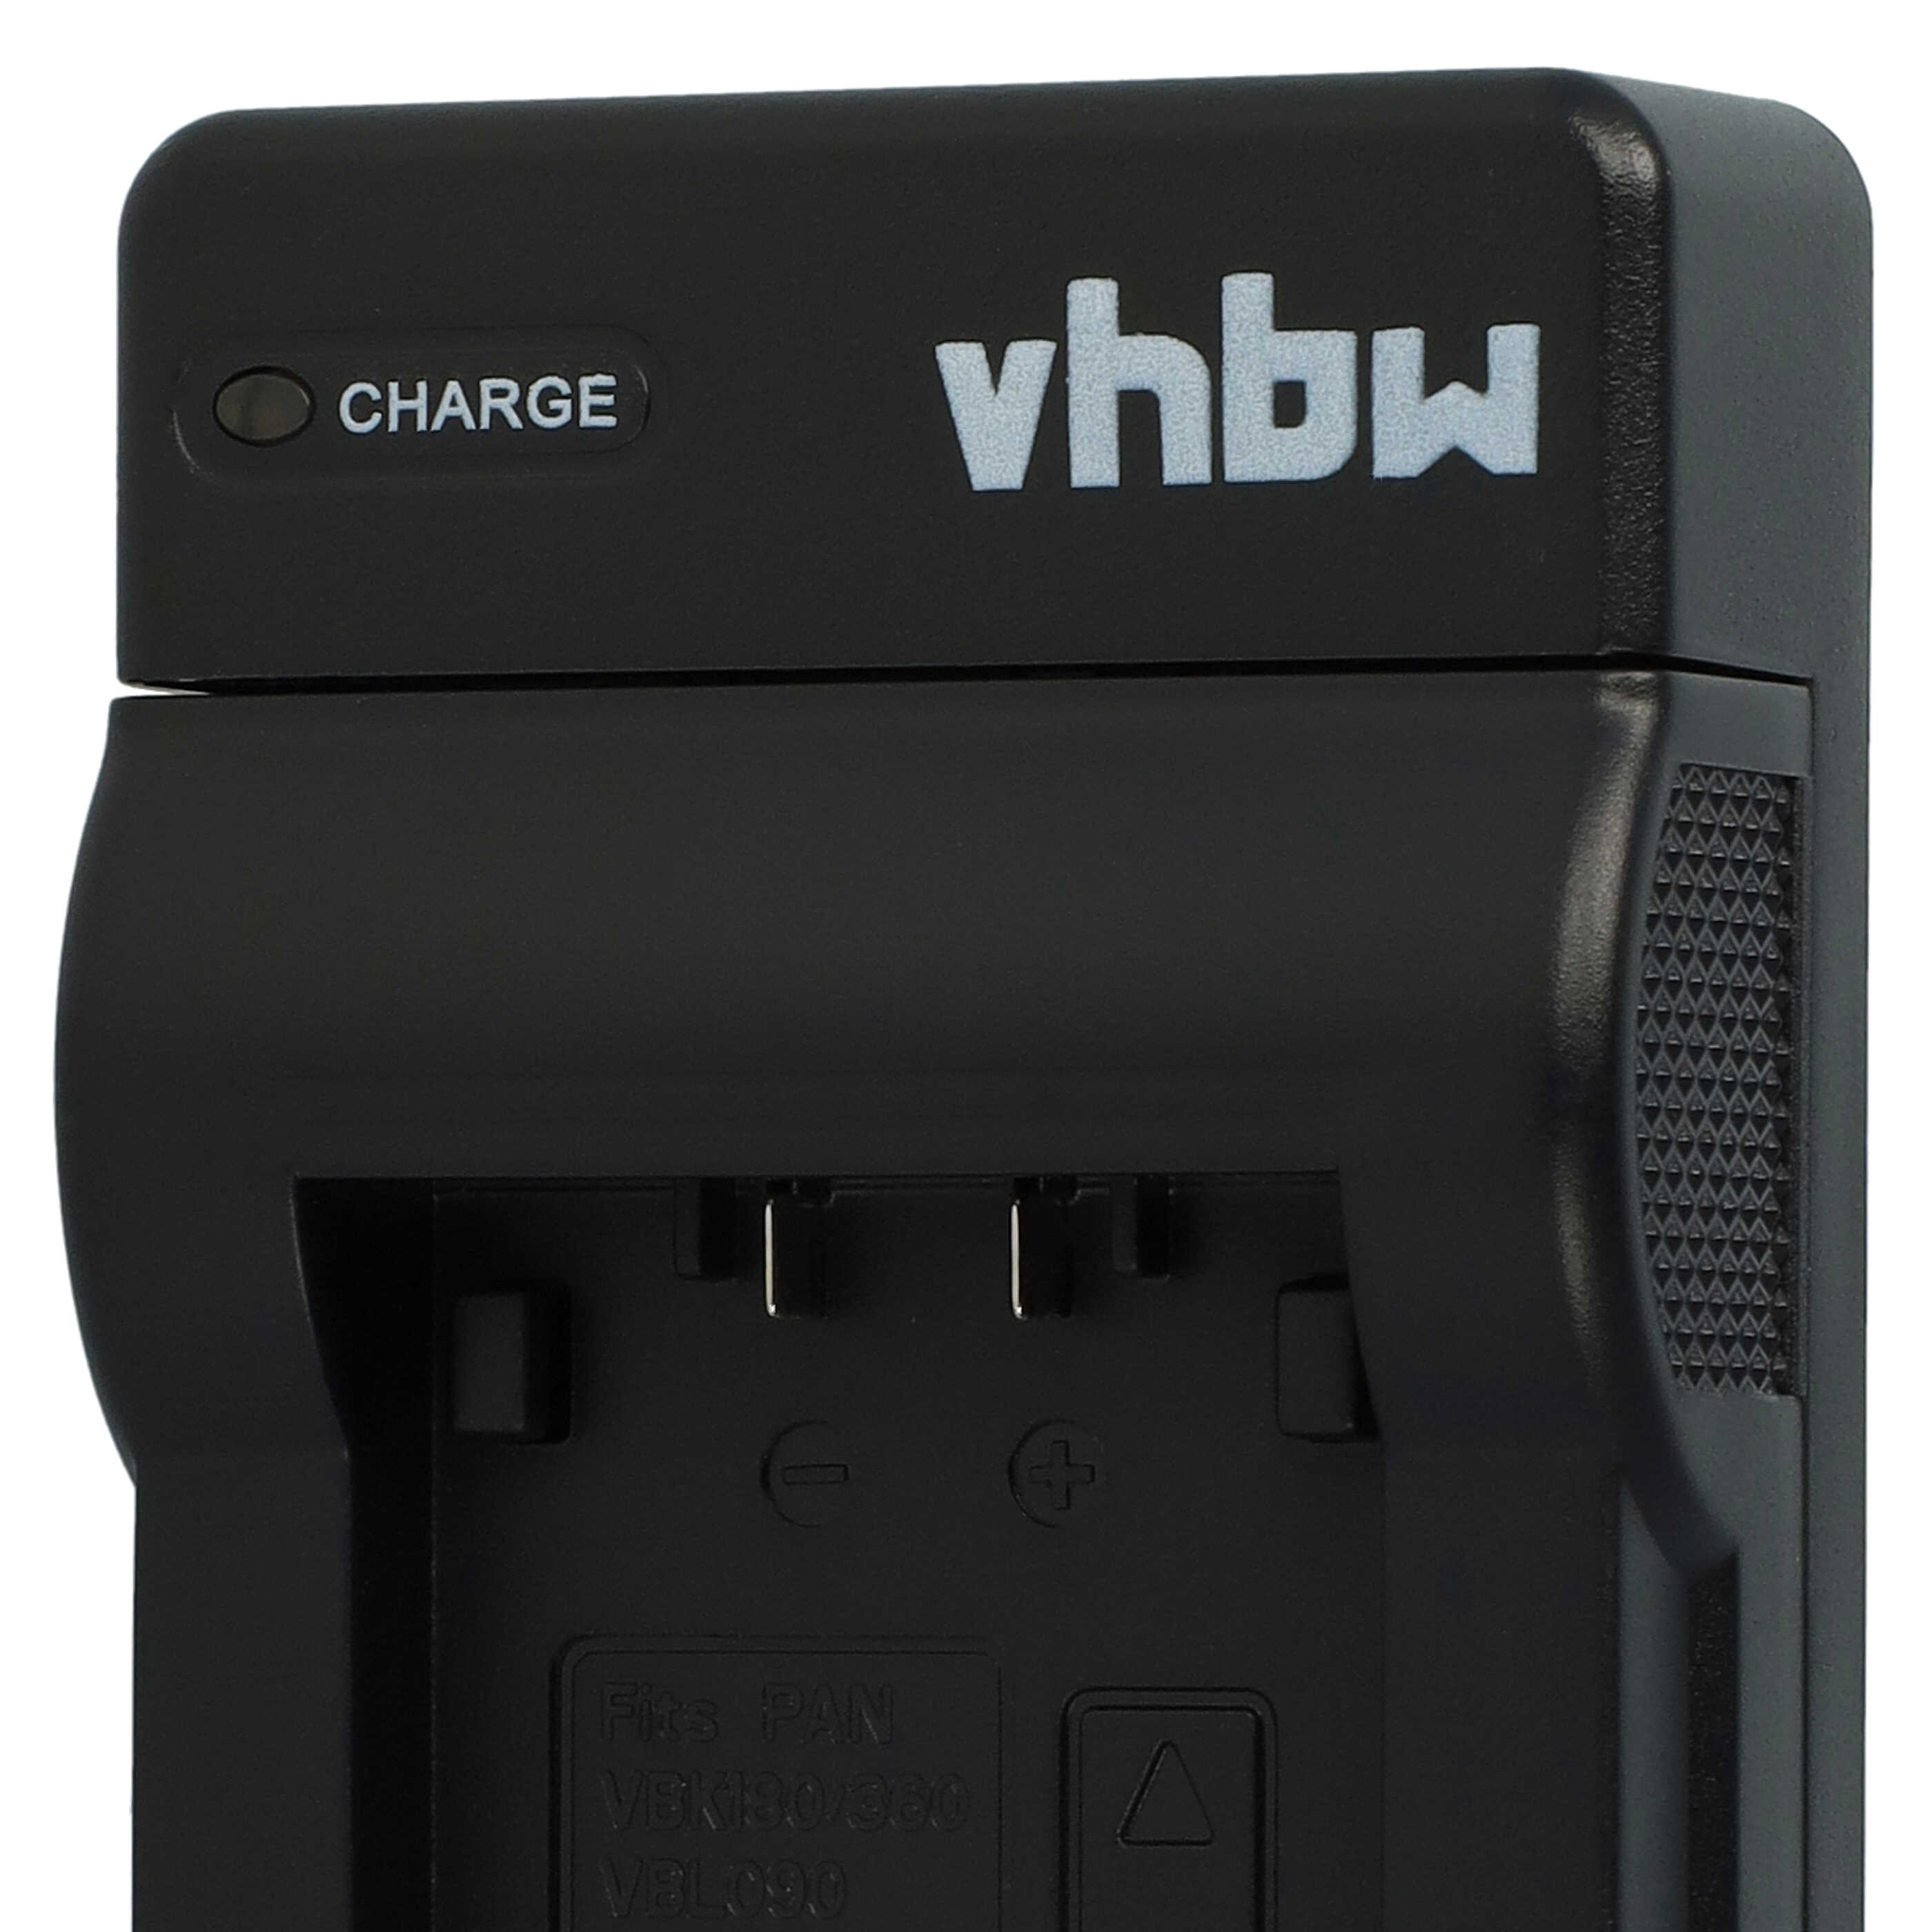 Battery Charger suitable for HC-V10 Camera etc. - 0.5 A, 4.2 V